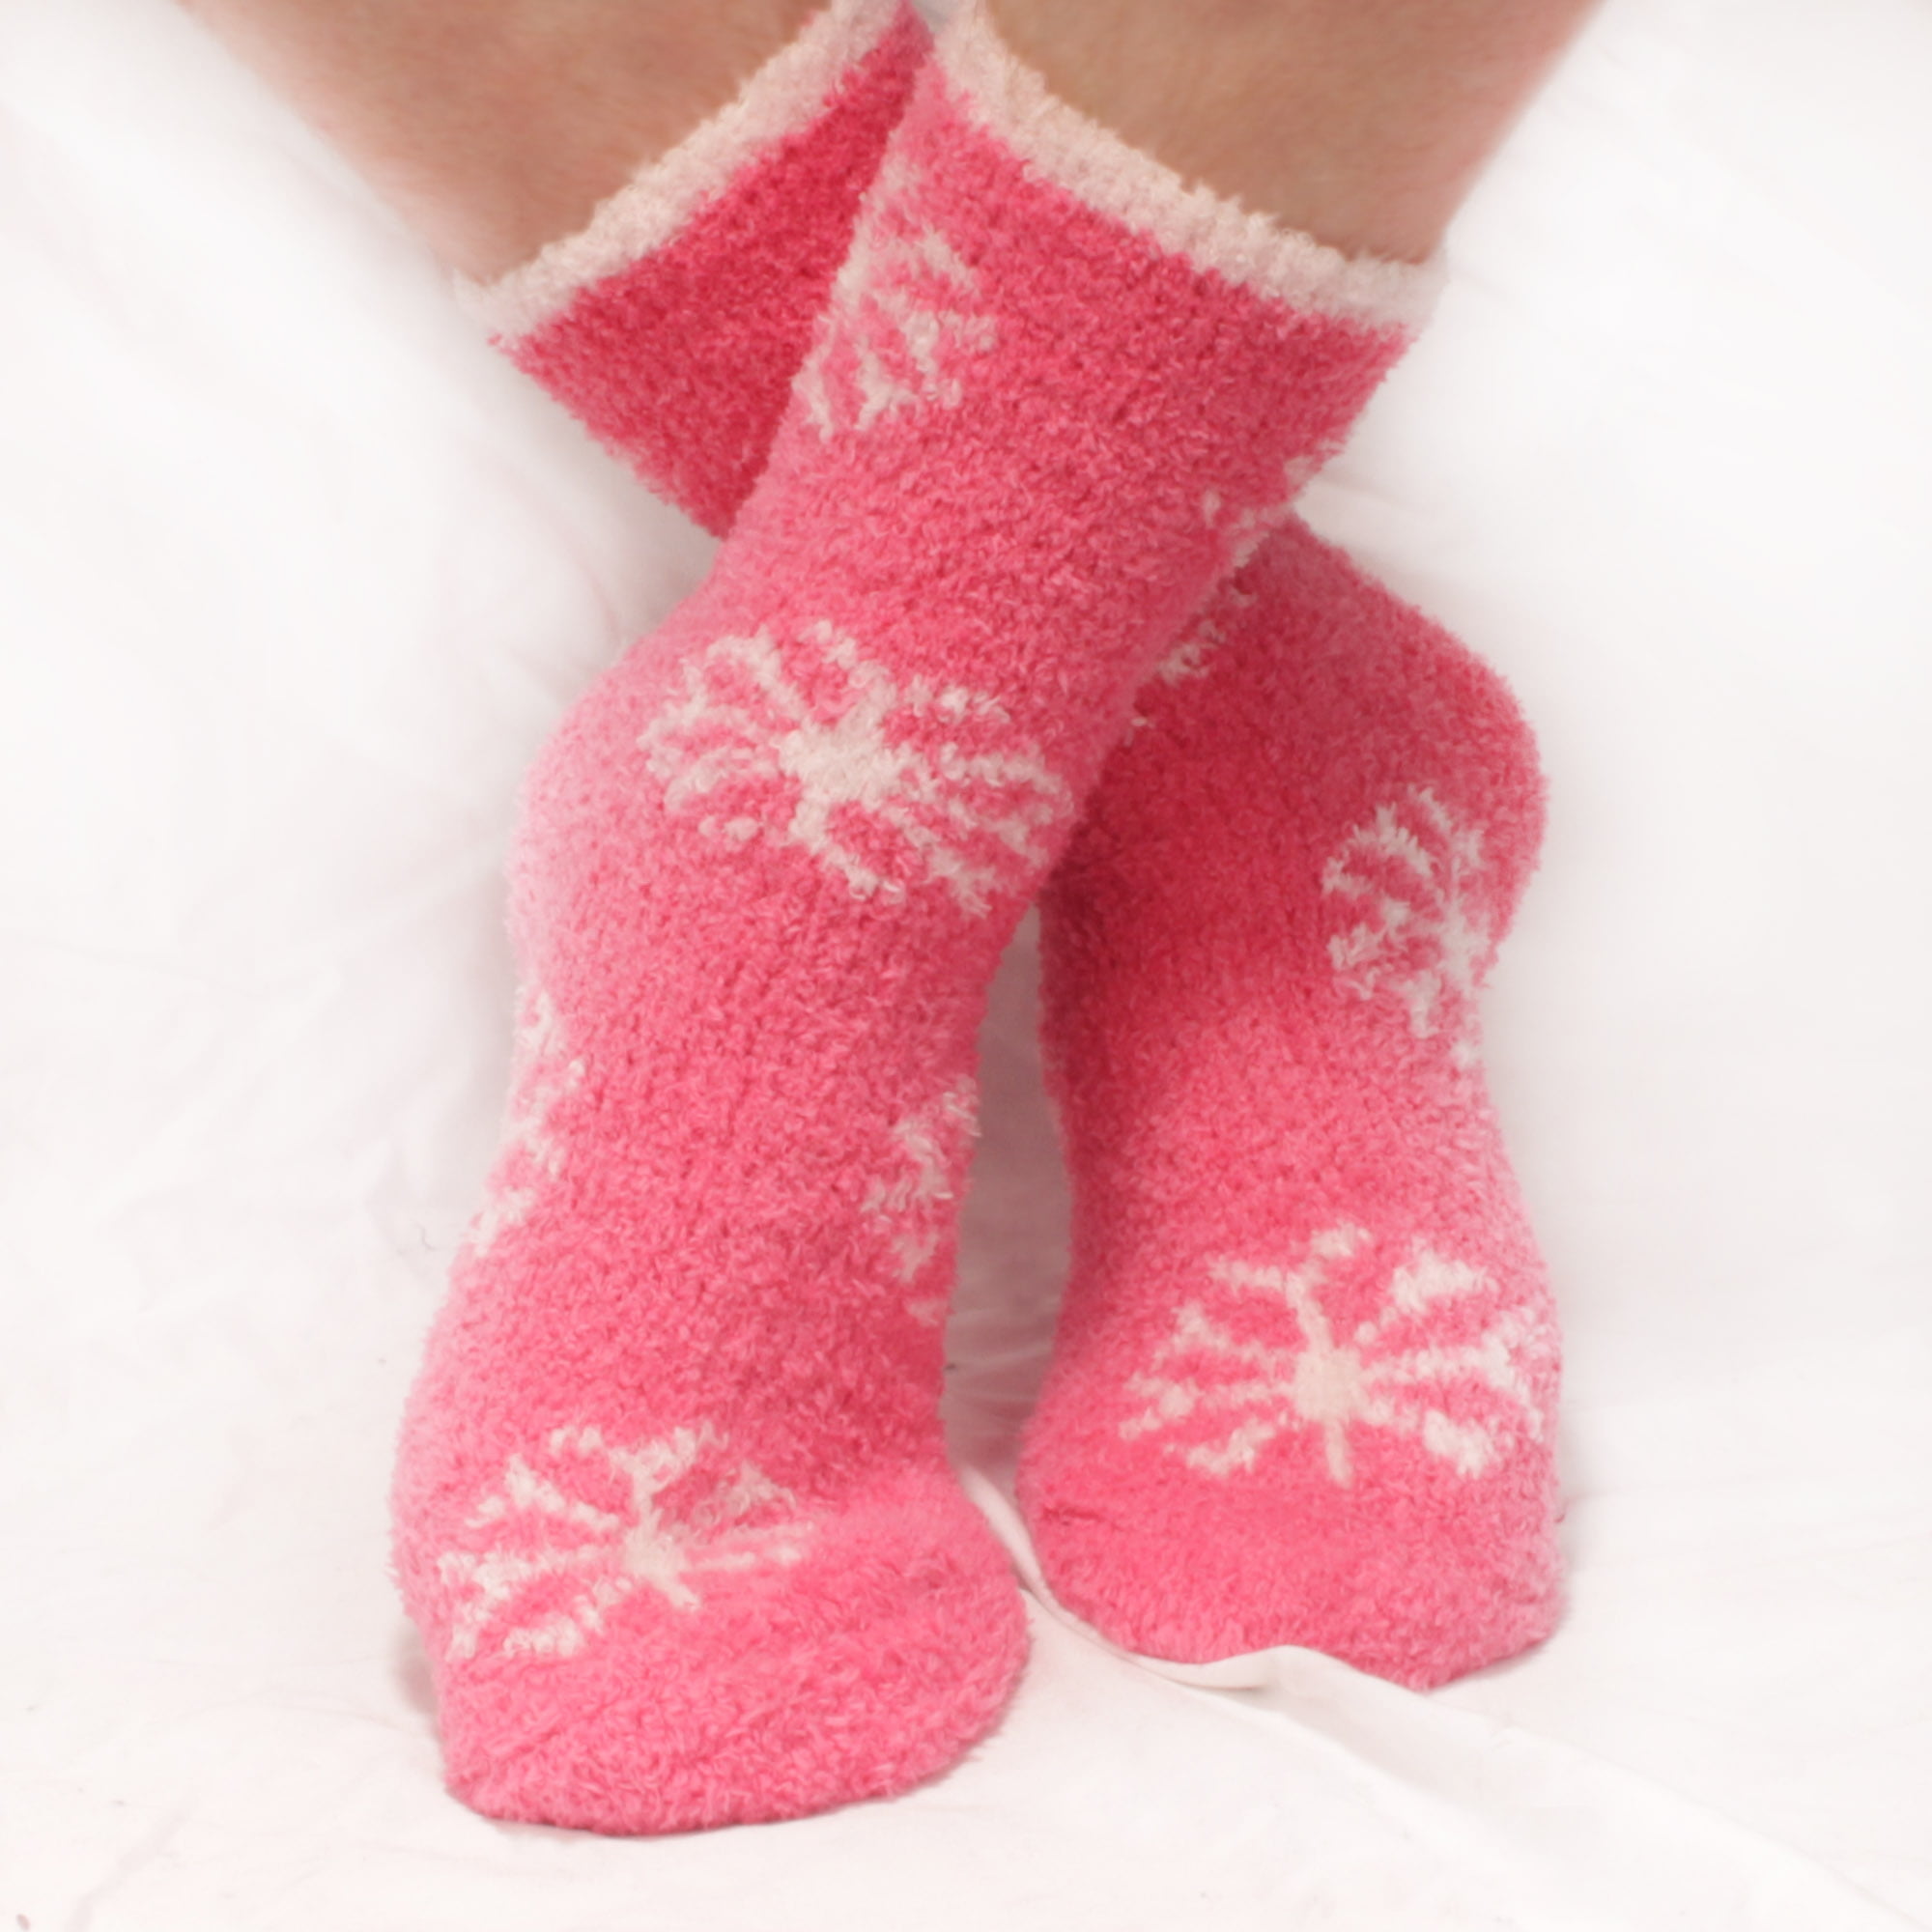 Virginia Tech Fuzzy Team Snowflake Sock